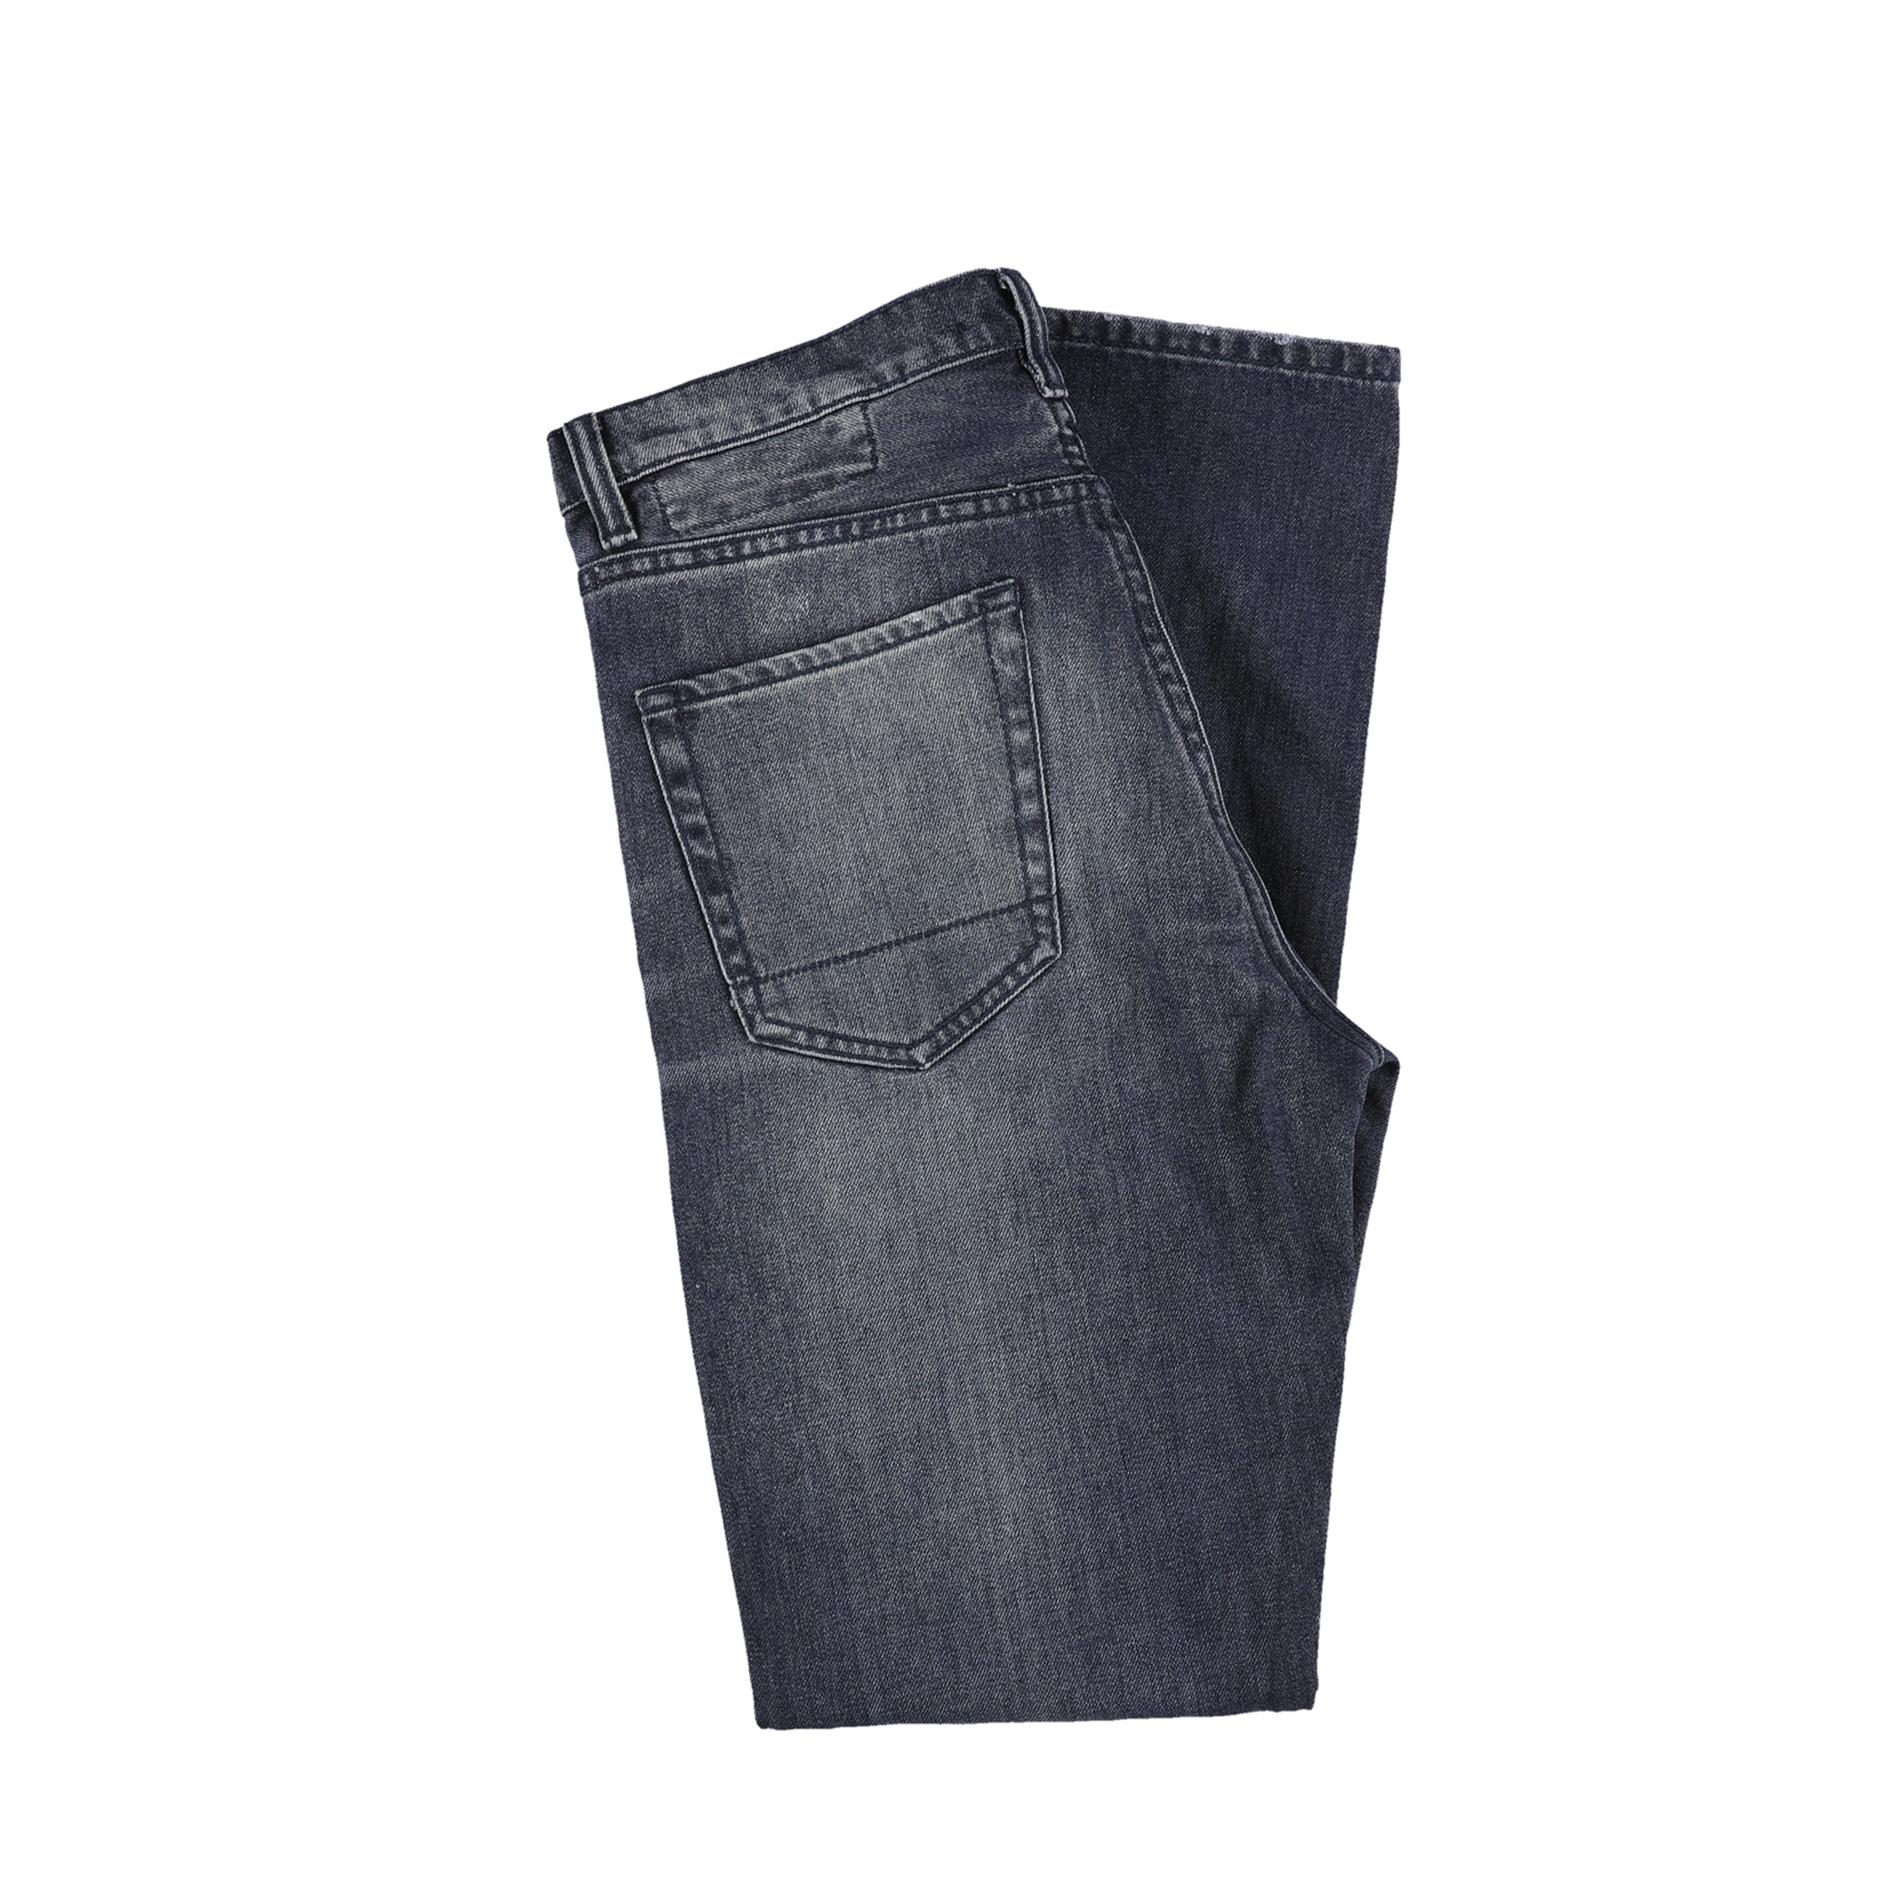 [Blank Nyc] Mens 015 Standard Regular Fit Jeans